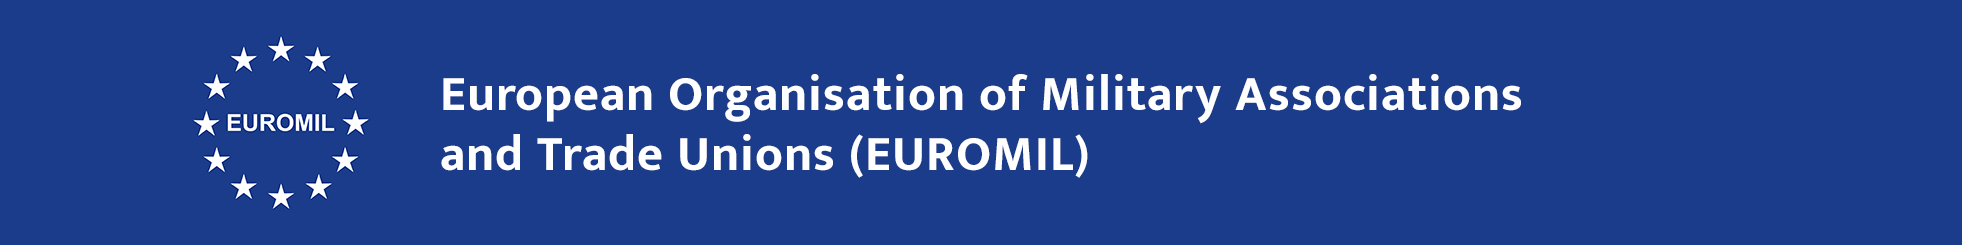 European Organisation of Military Association